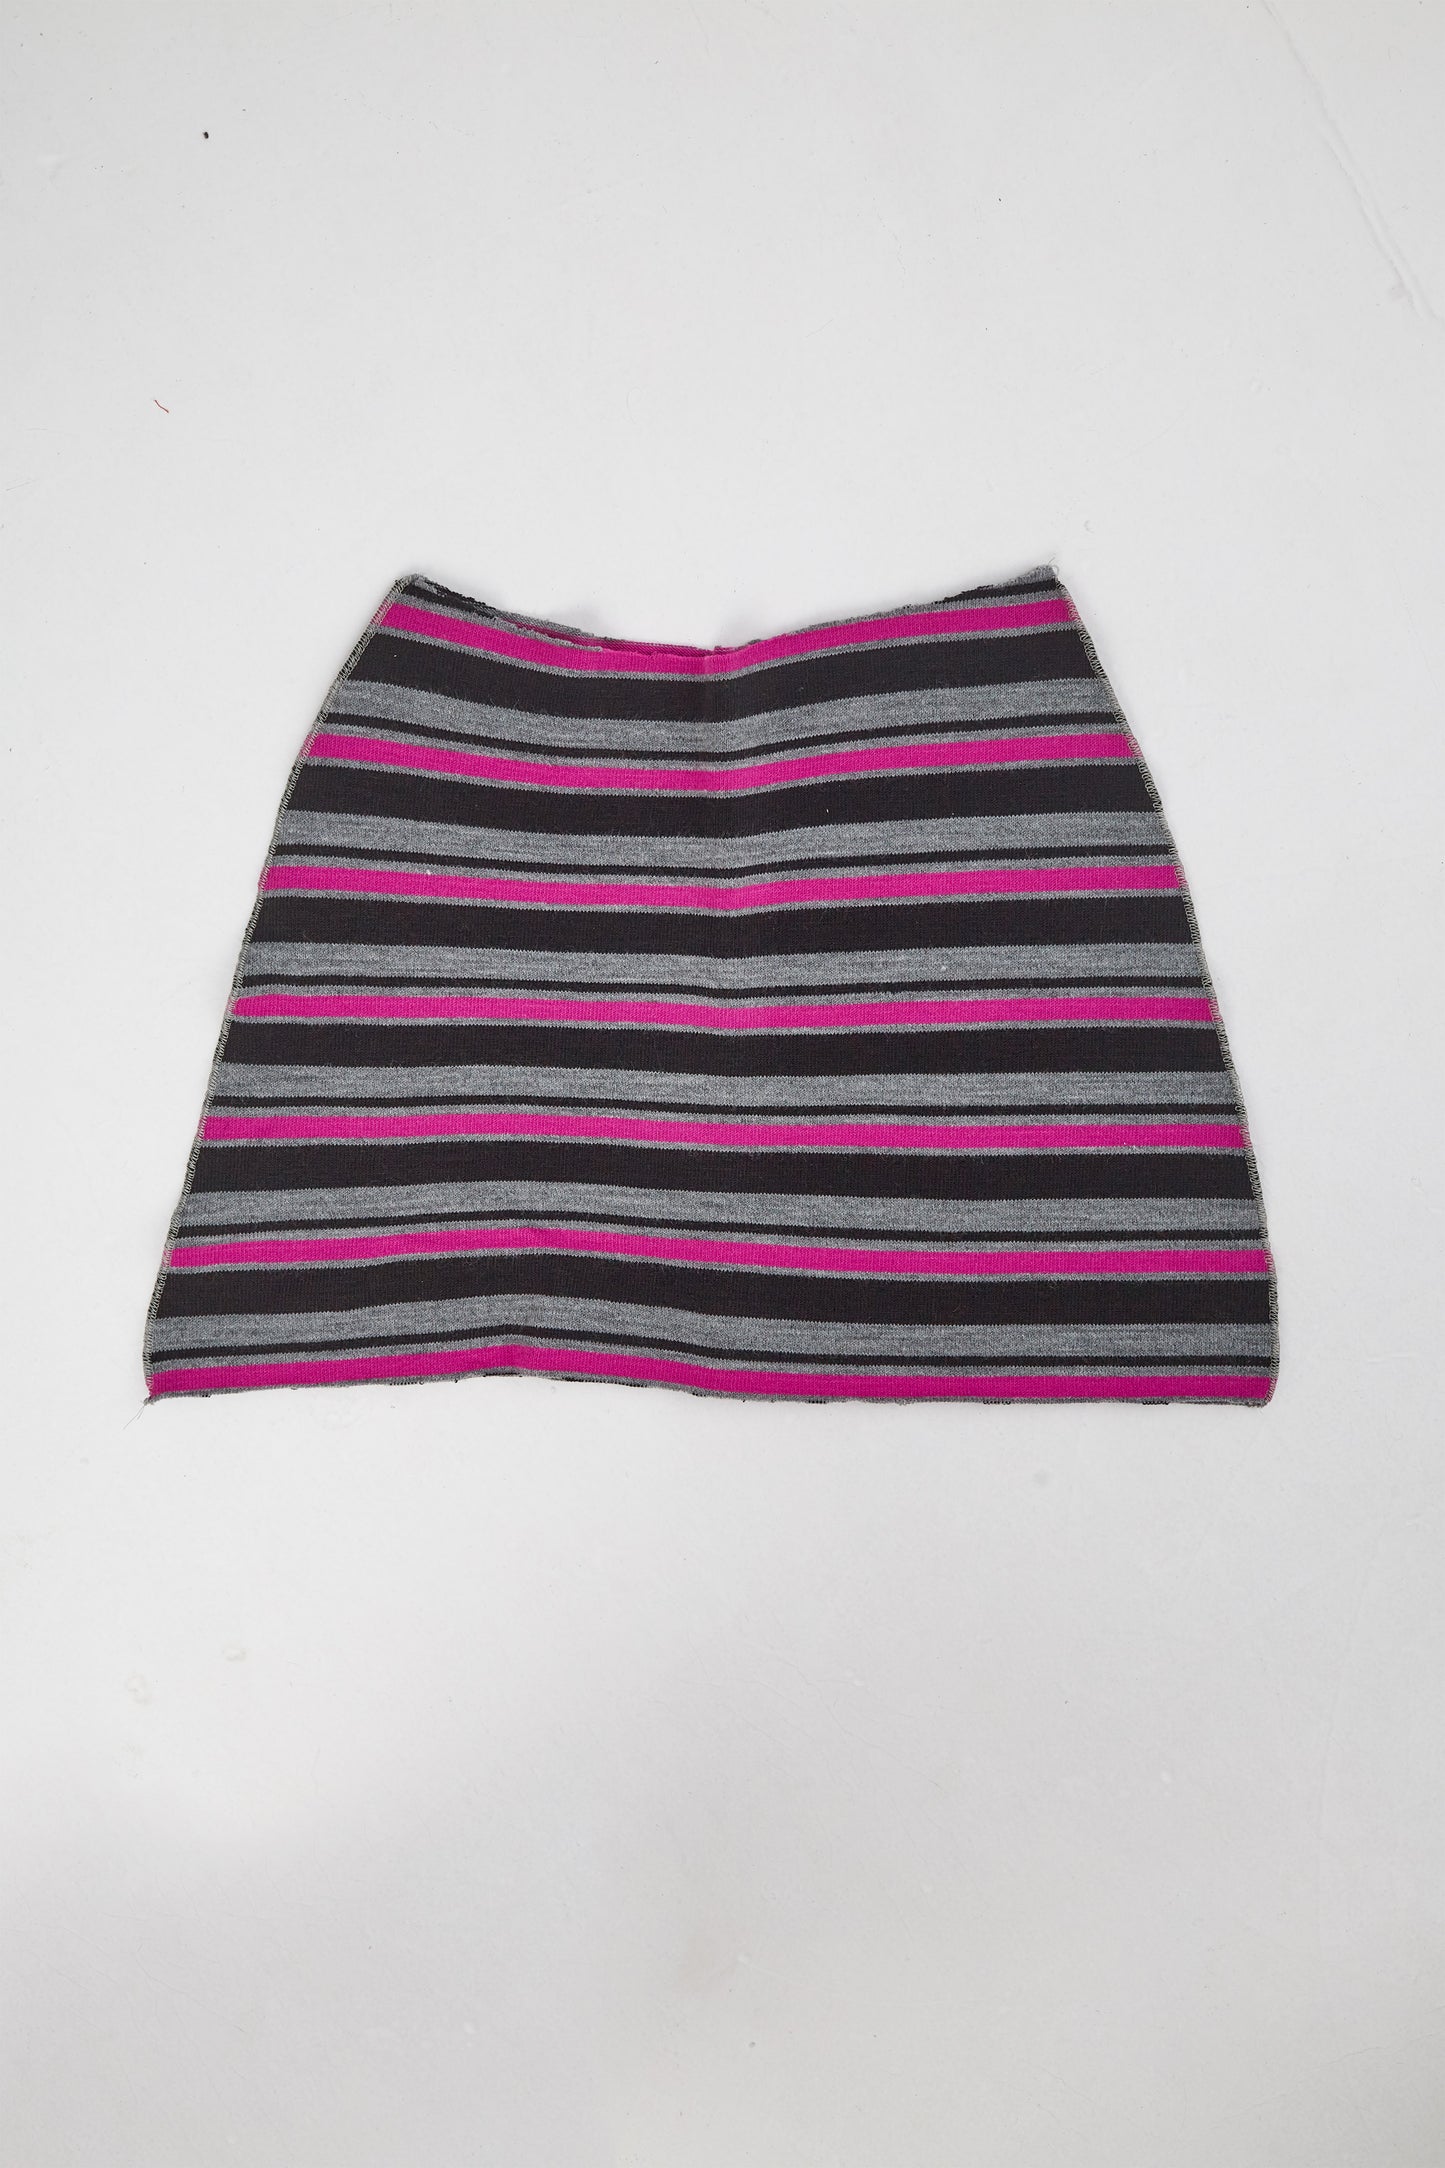 Striped mini skirt <3